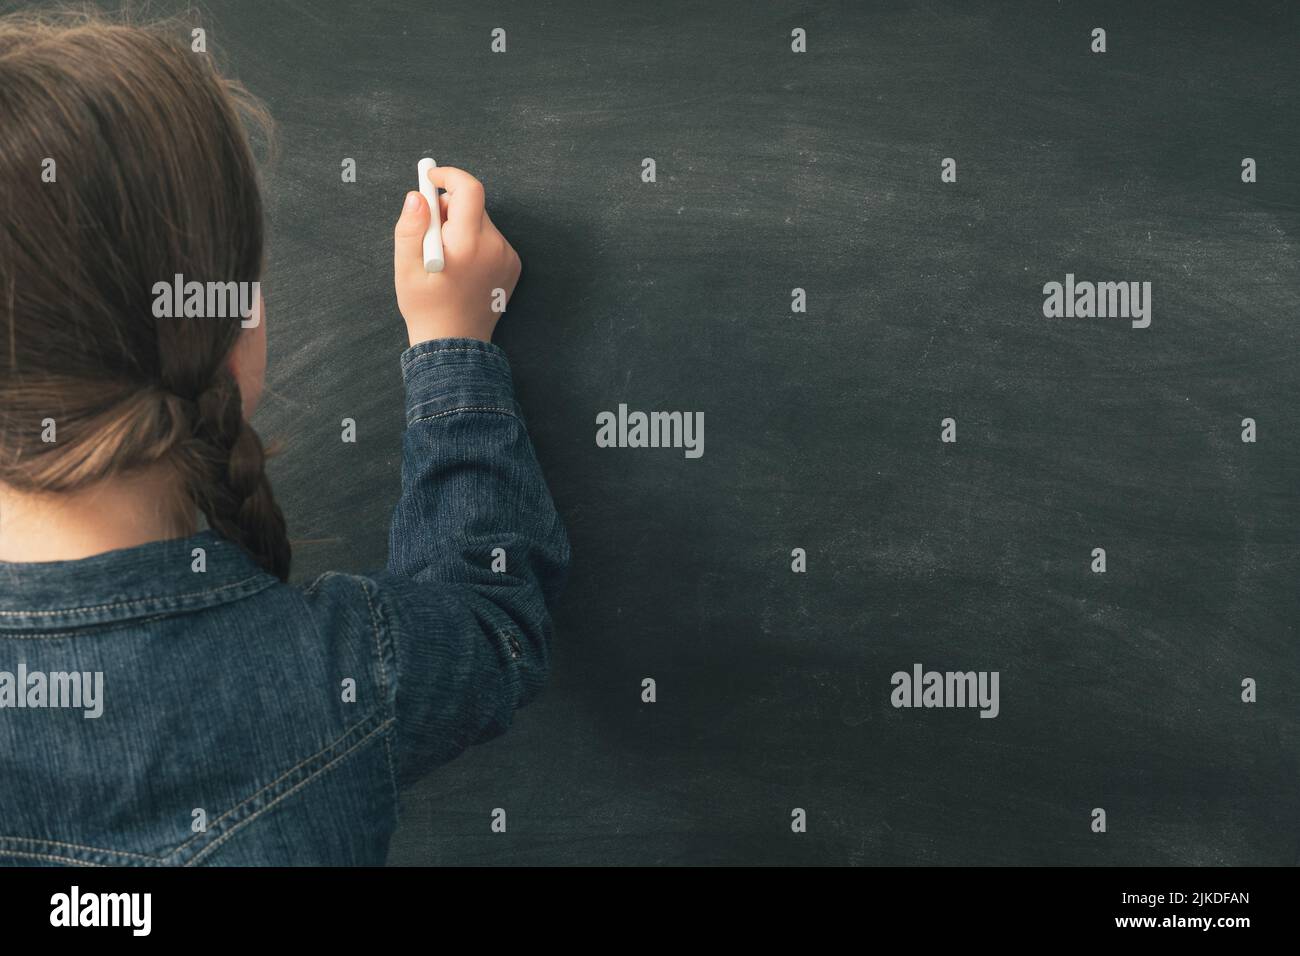 school education girl writing blank chalkboard Stock Photo